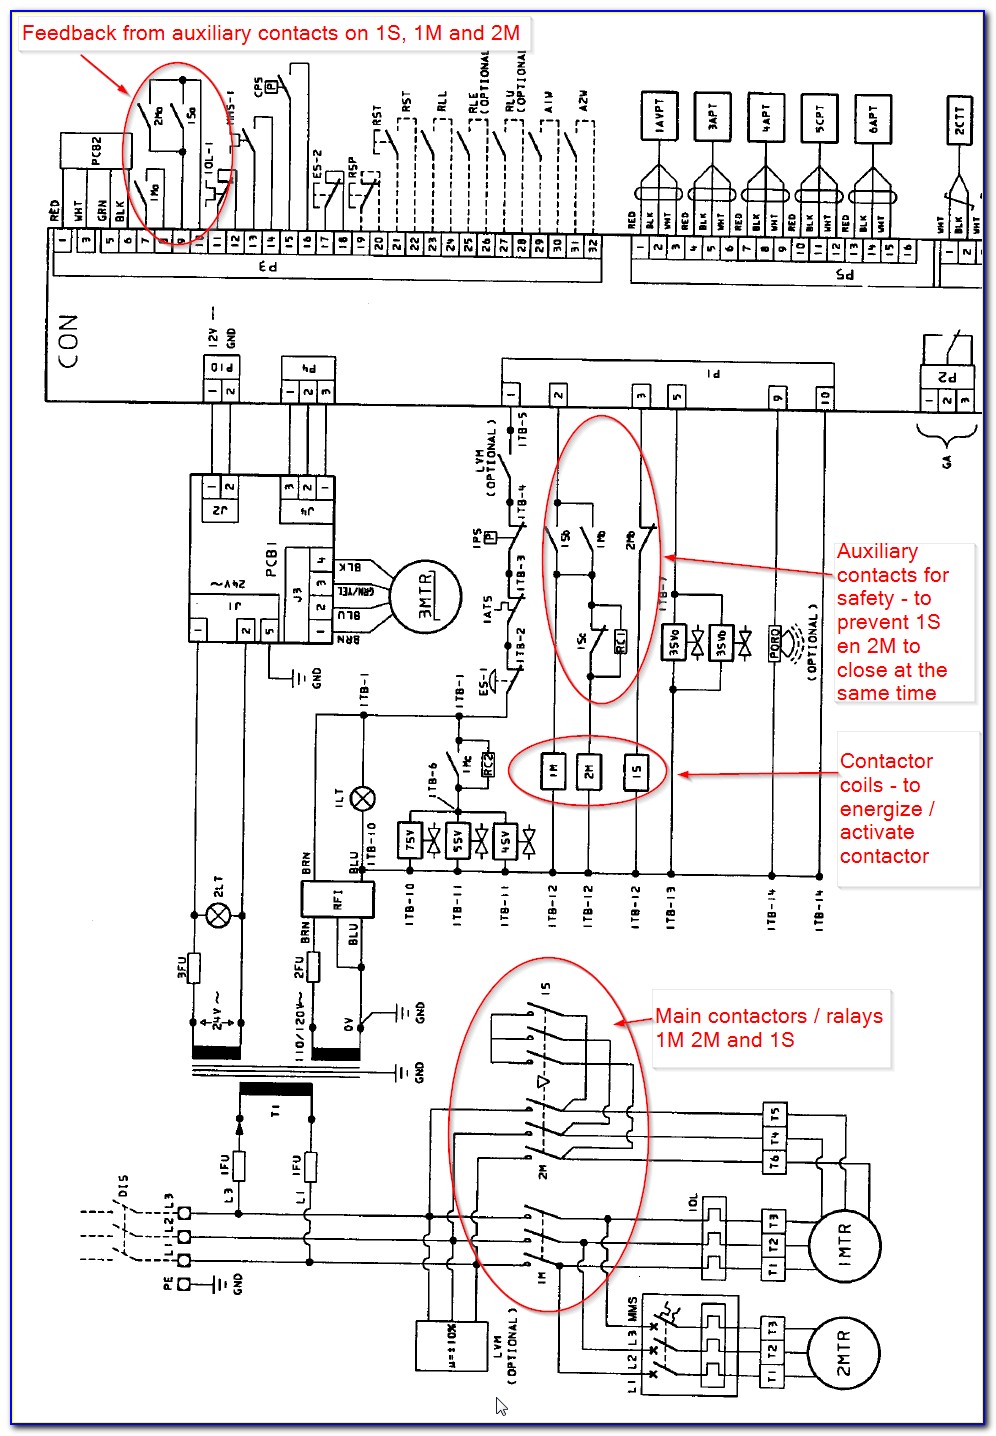 Ingersoll Rand 185 Air Compressor Wiring Diagram